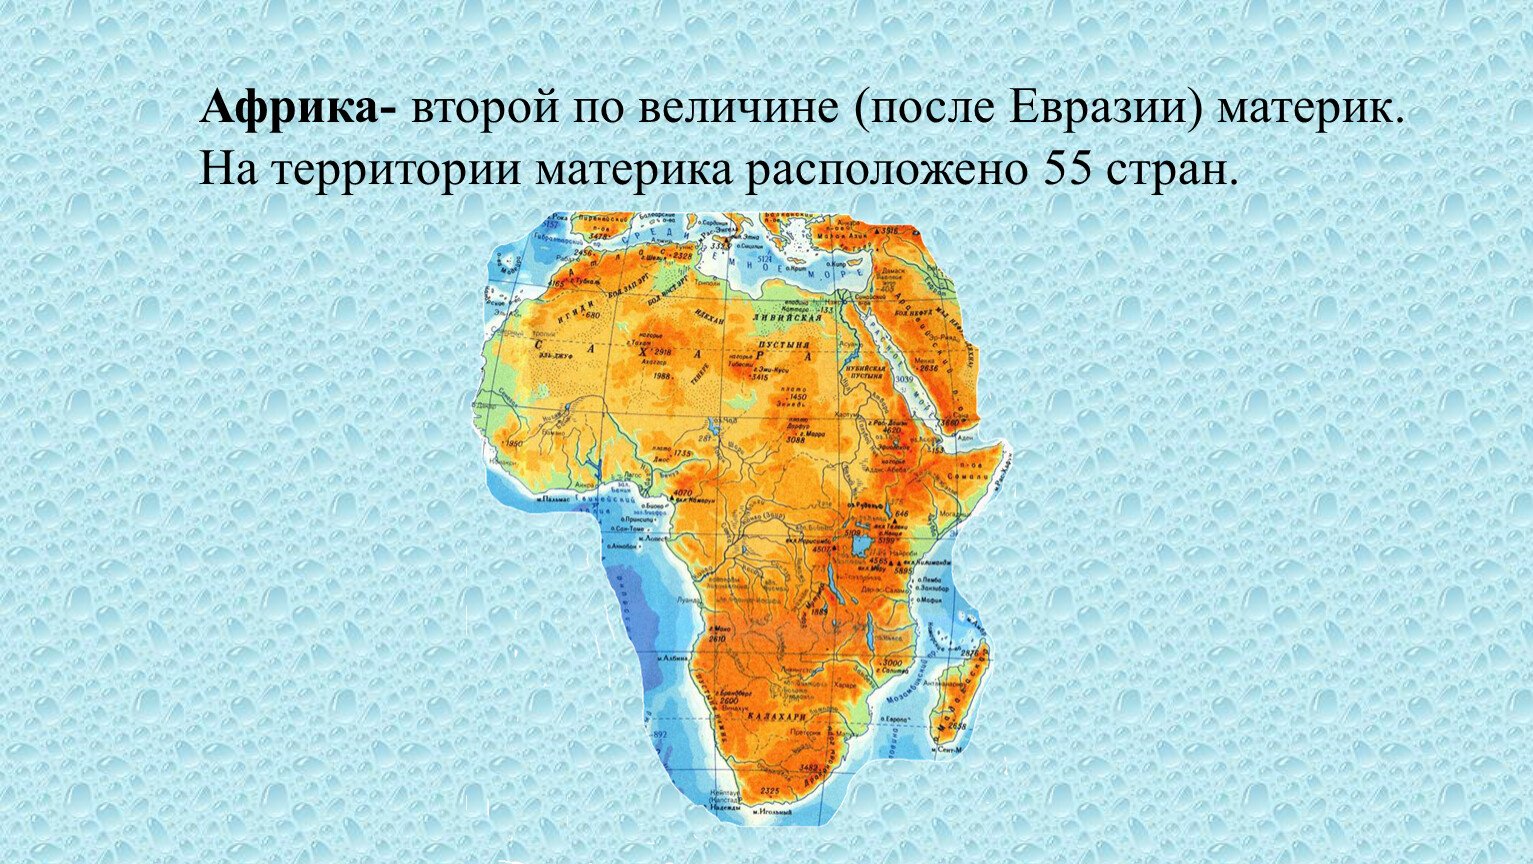 2 по величине материк земли. Карта Африки. Африка материк. Материк Африка на карте. Карта африканского континента.